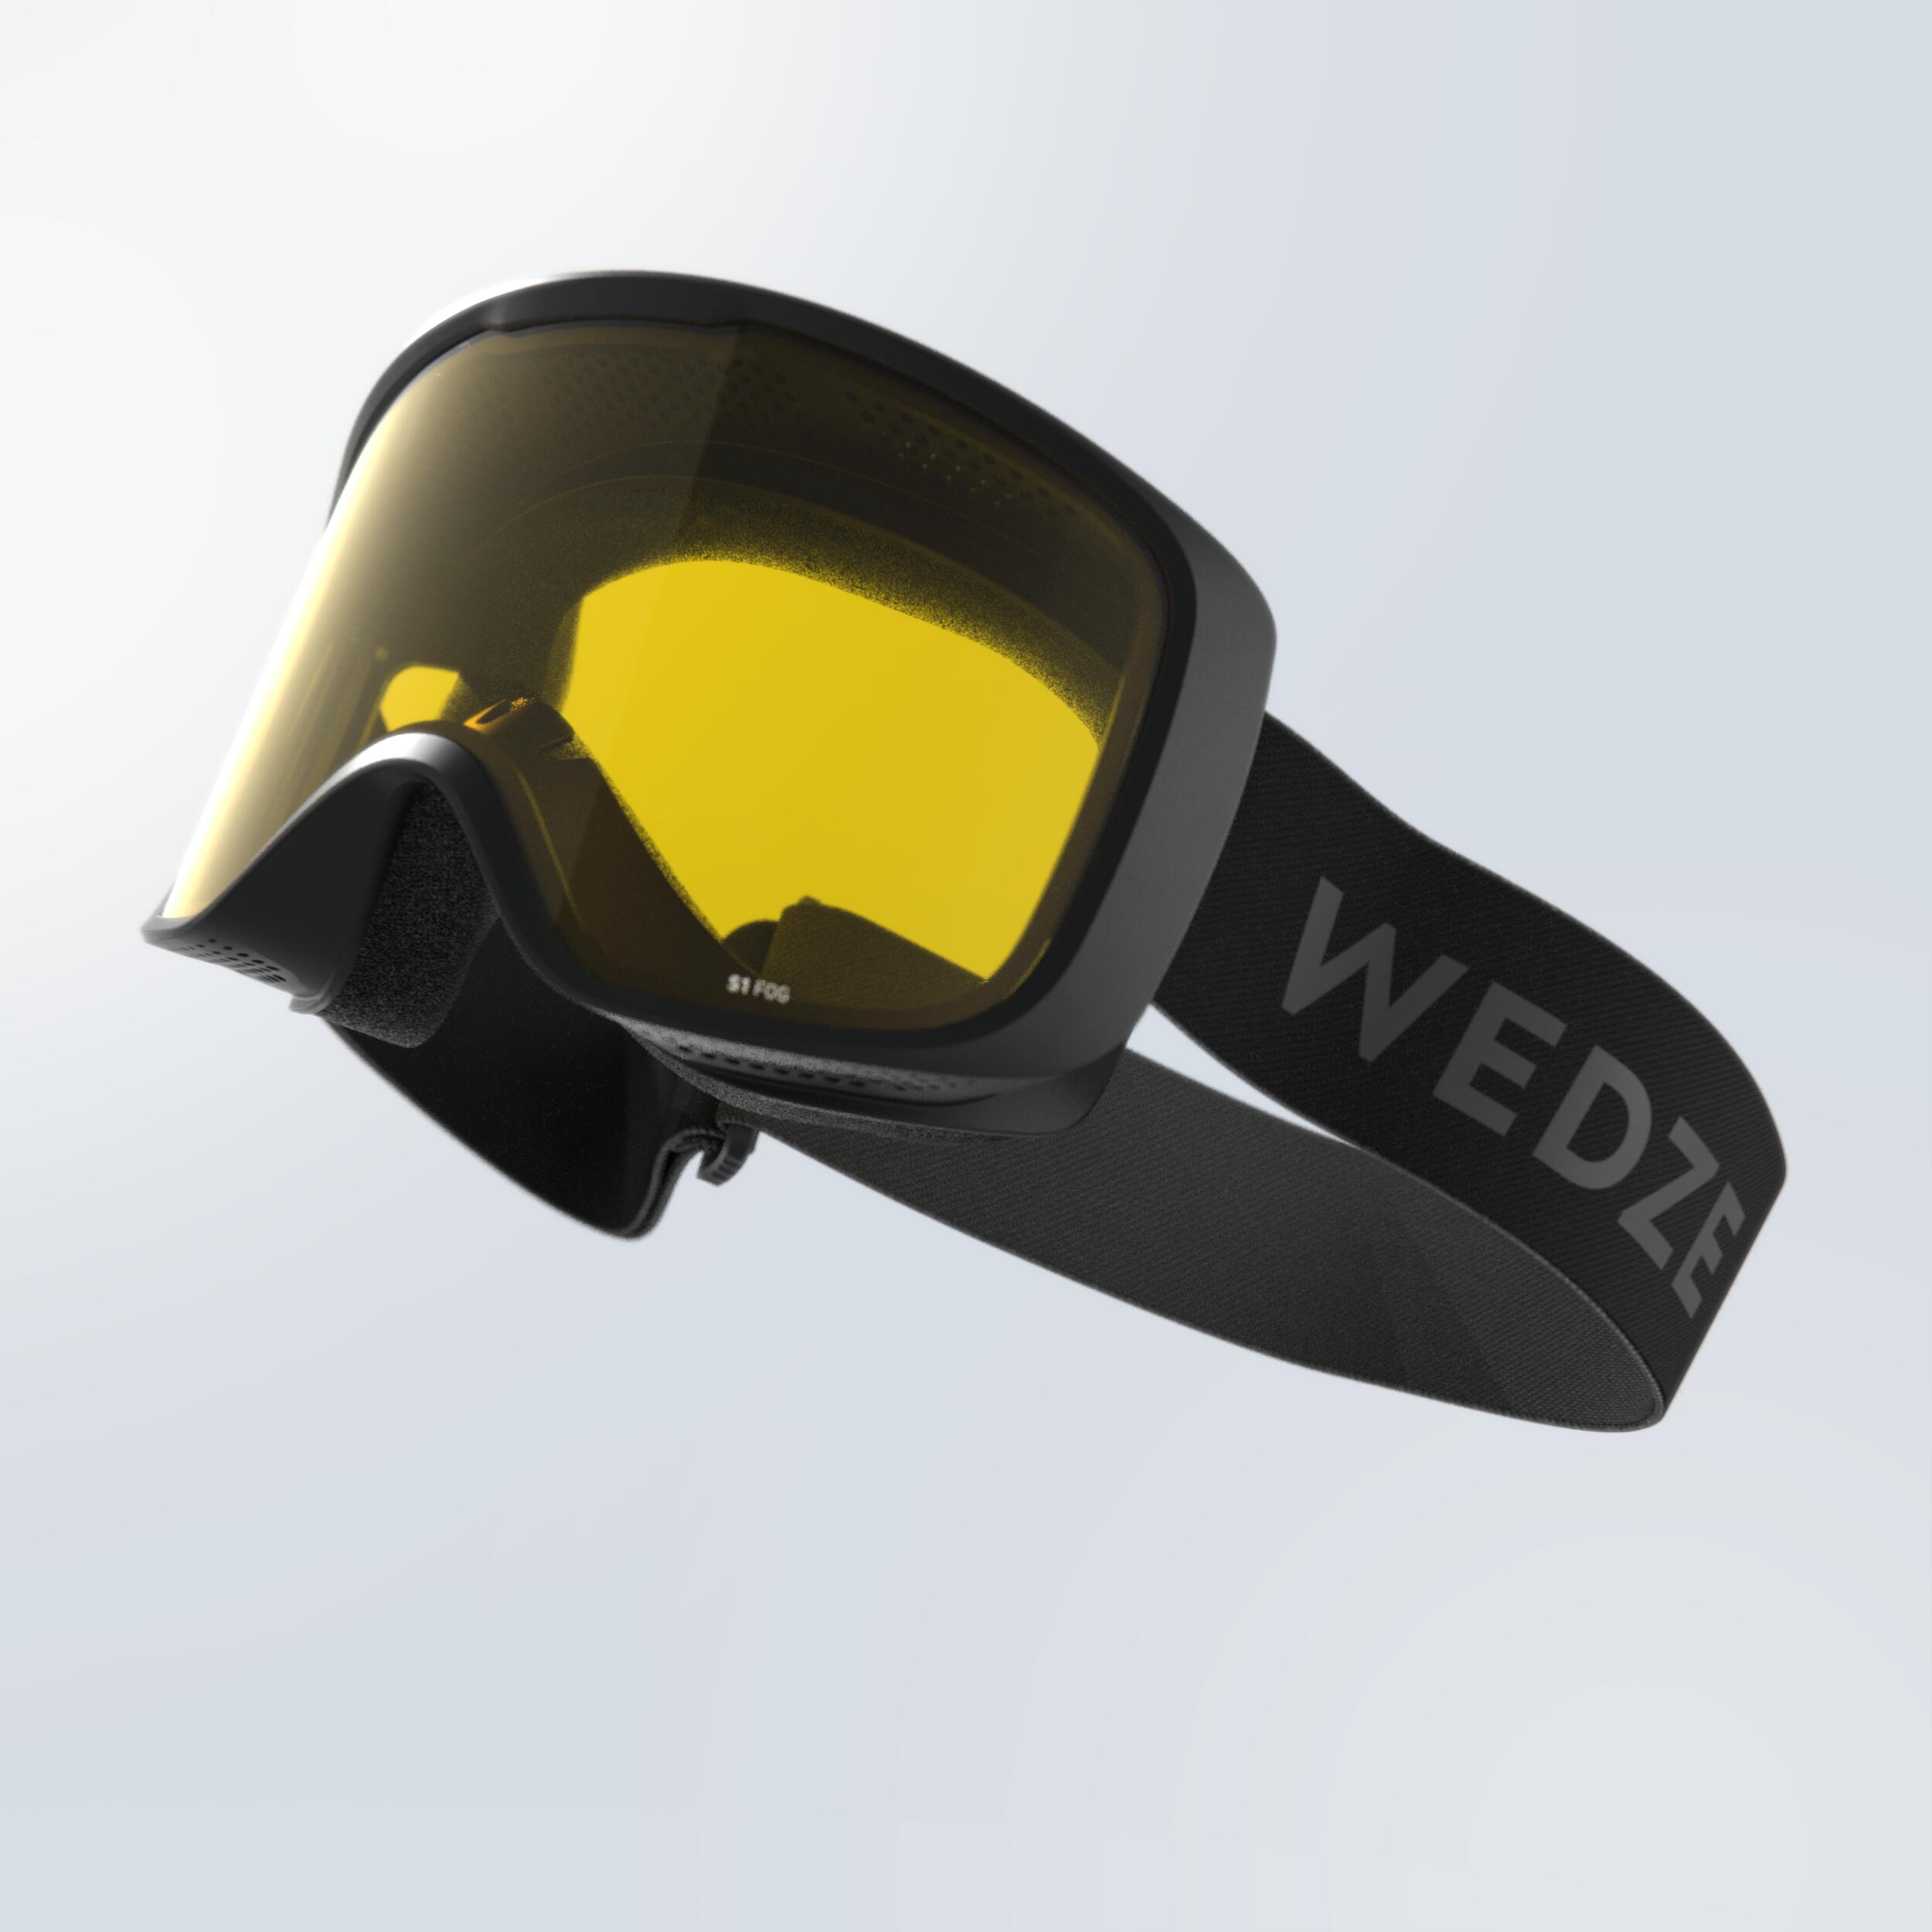 YAKAON Y1 Ski Snowboard Snow Goggles with UV Protection Anti-Fog Spherical OTG Anti-Slip Strap for Men Women 